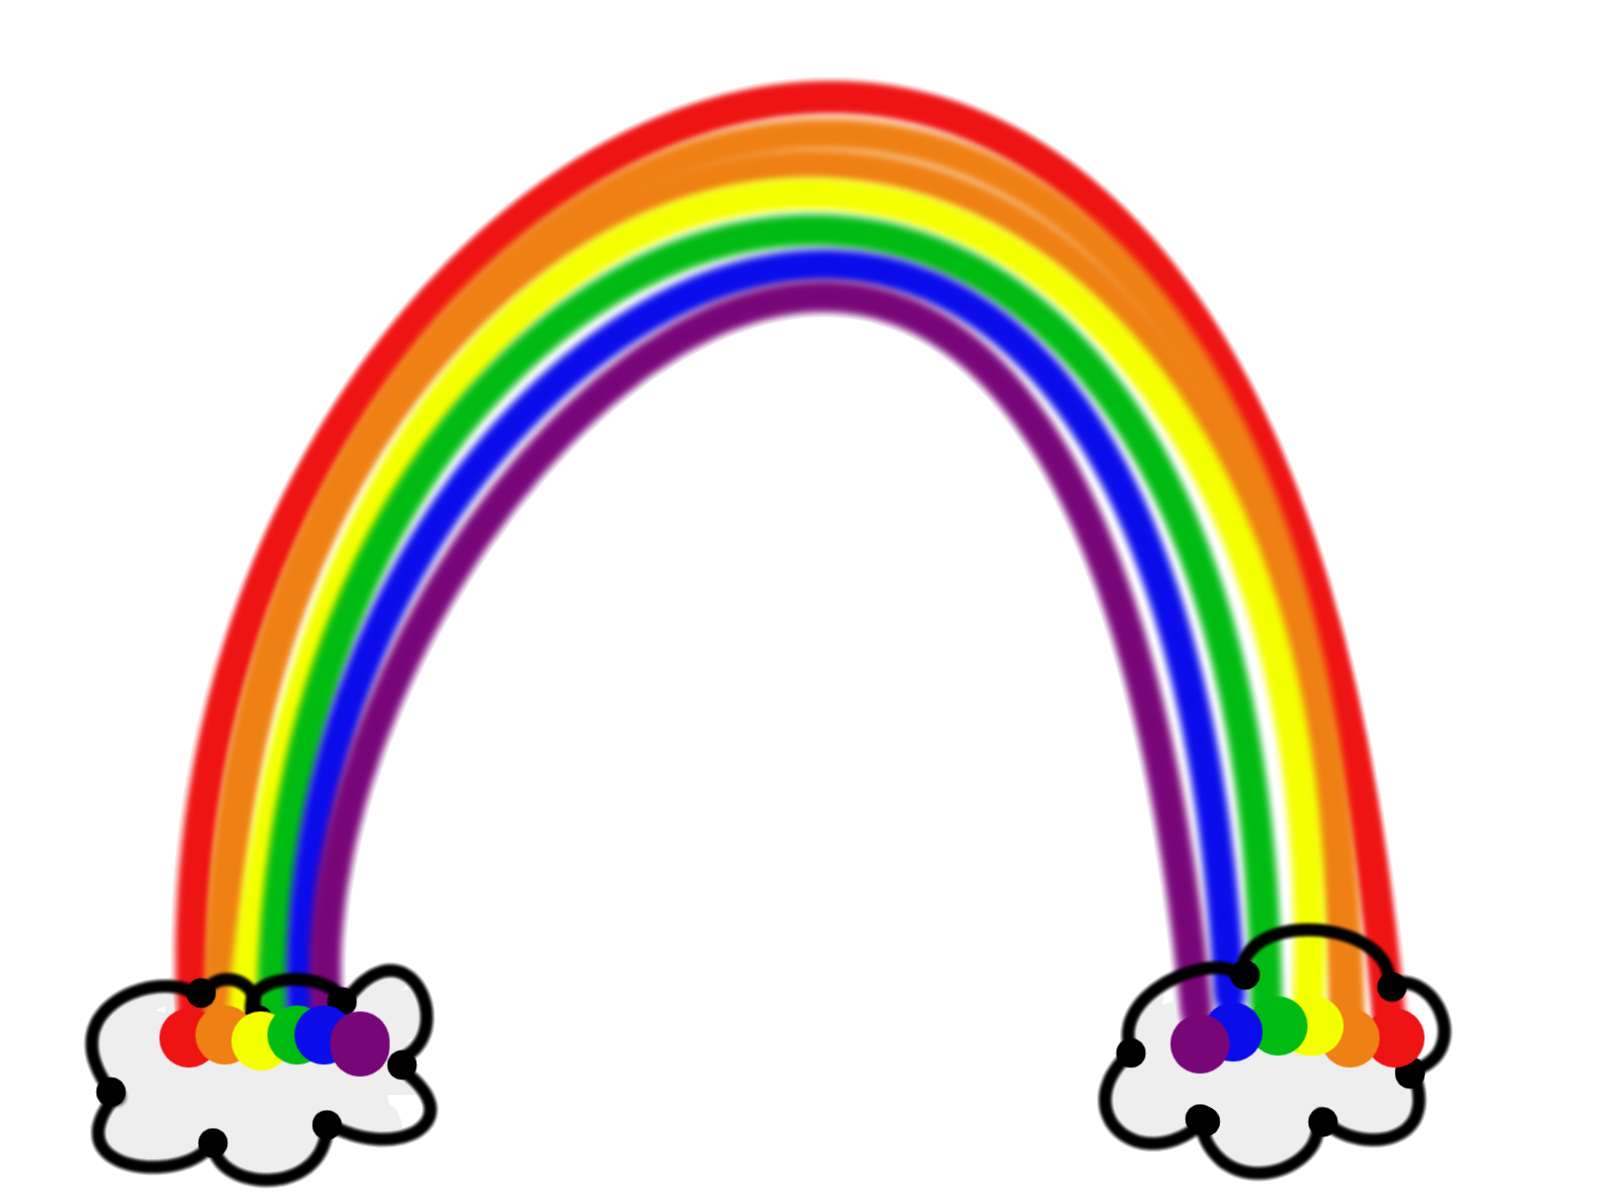 Square clipart rainbow. For kids panda free